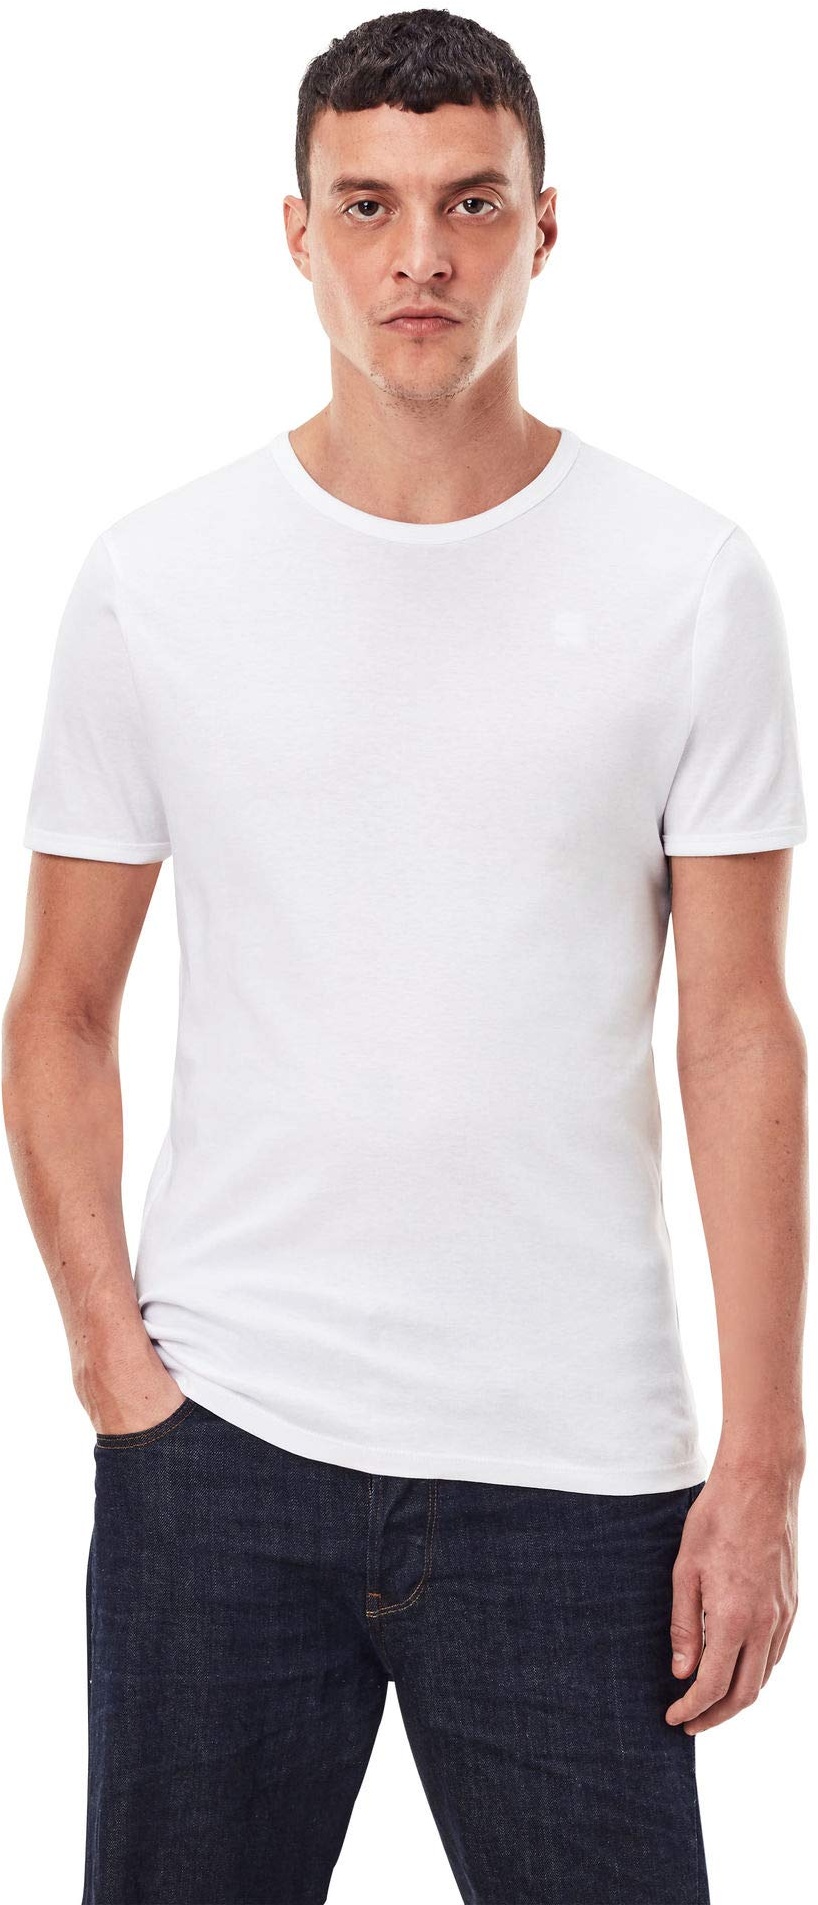 G-STAR RAW Herren Basic T-Shirt 2-Pack, Weiß (white D07205-124-110), M